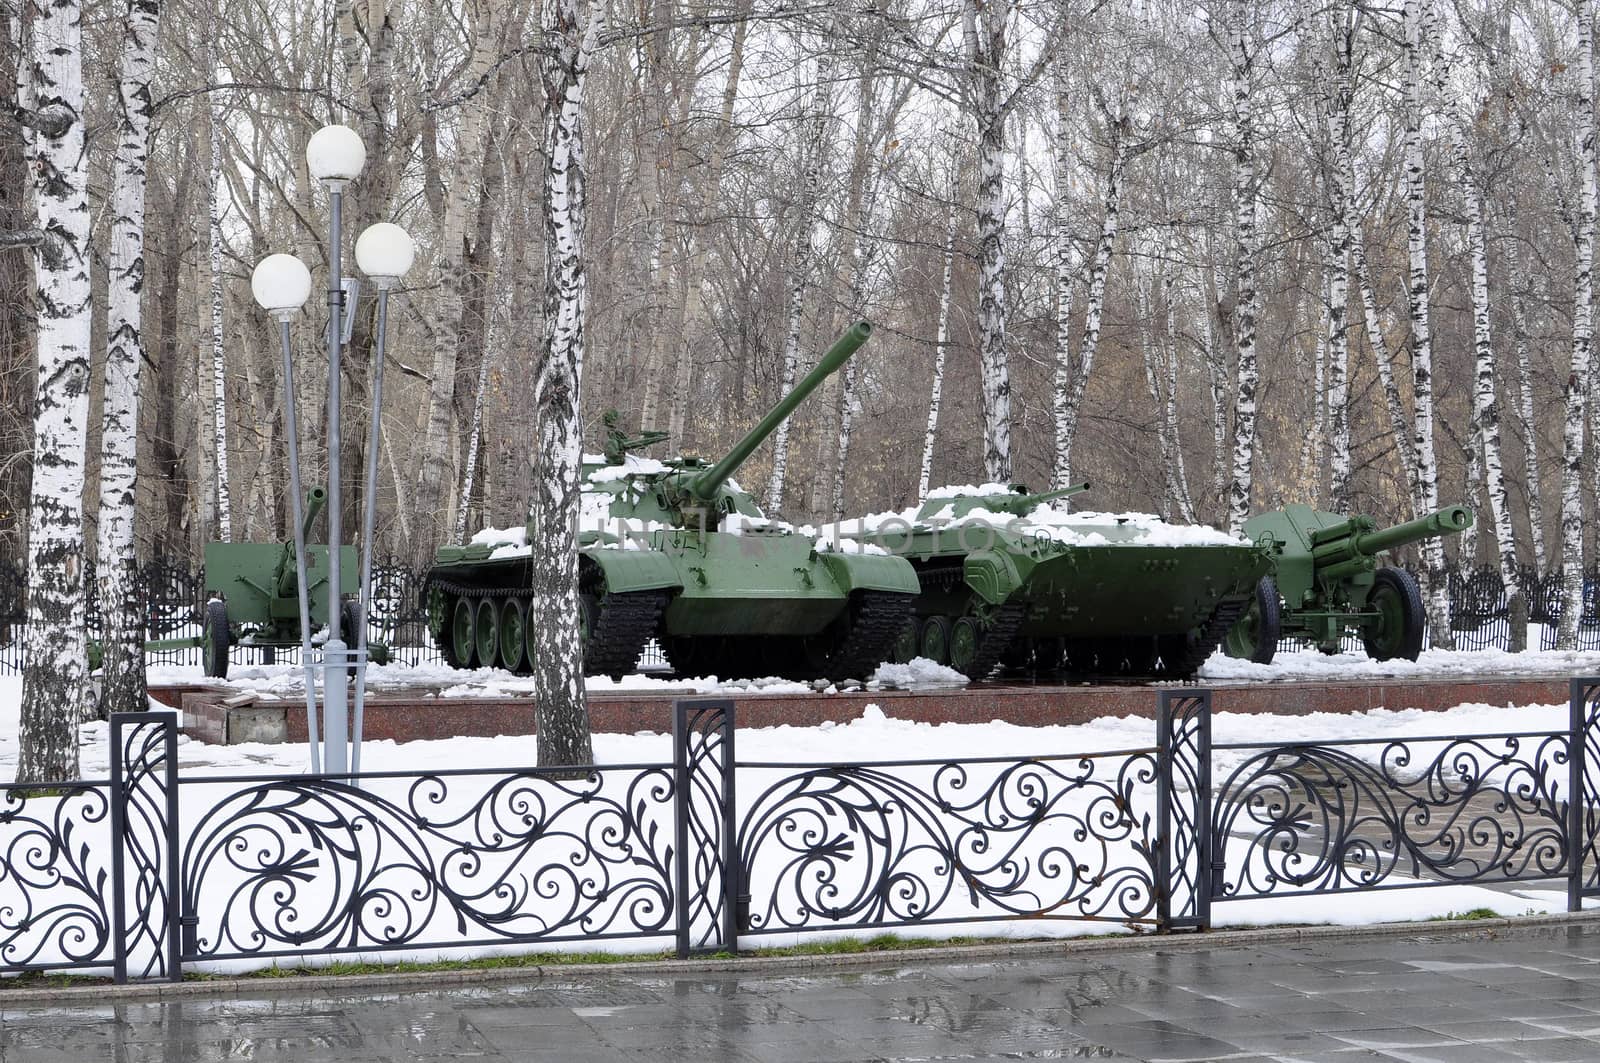 Exhibition of armored equipment. Tyumen. by veronka72